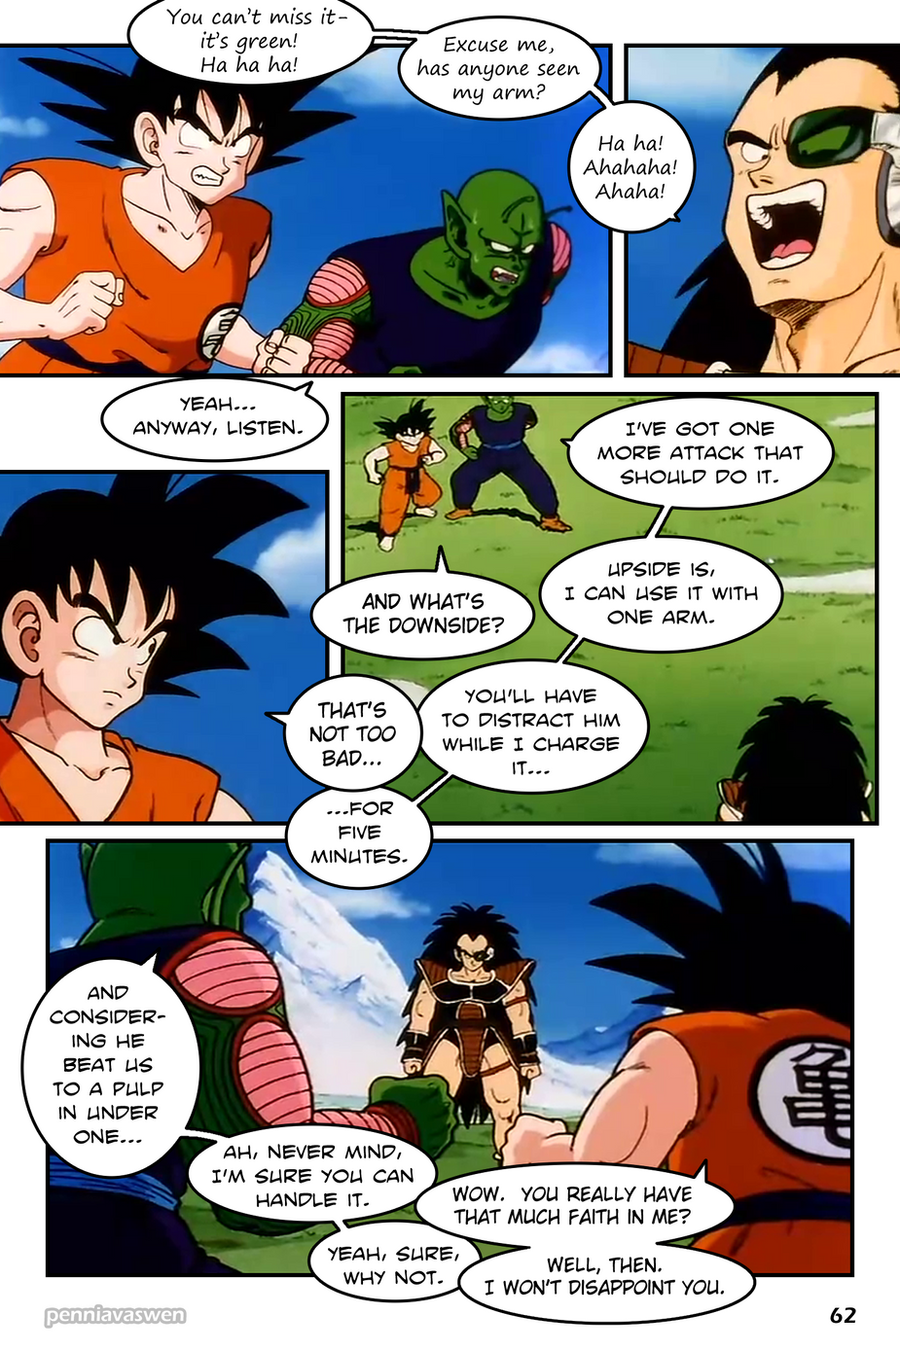 DragonBall Z Abridged The Manga Page 062 By Penniavaswen On